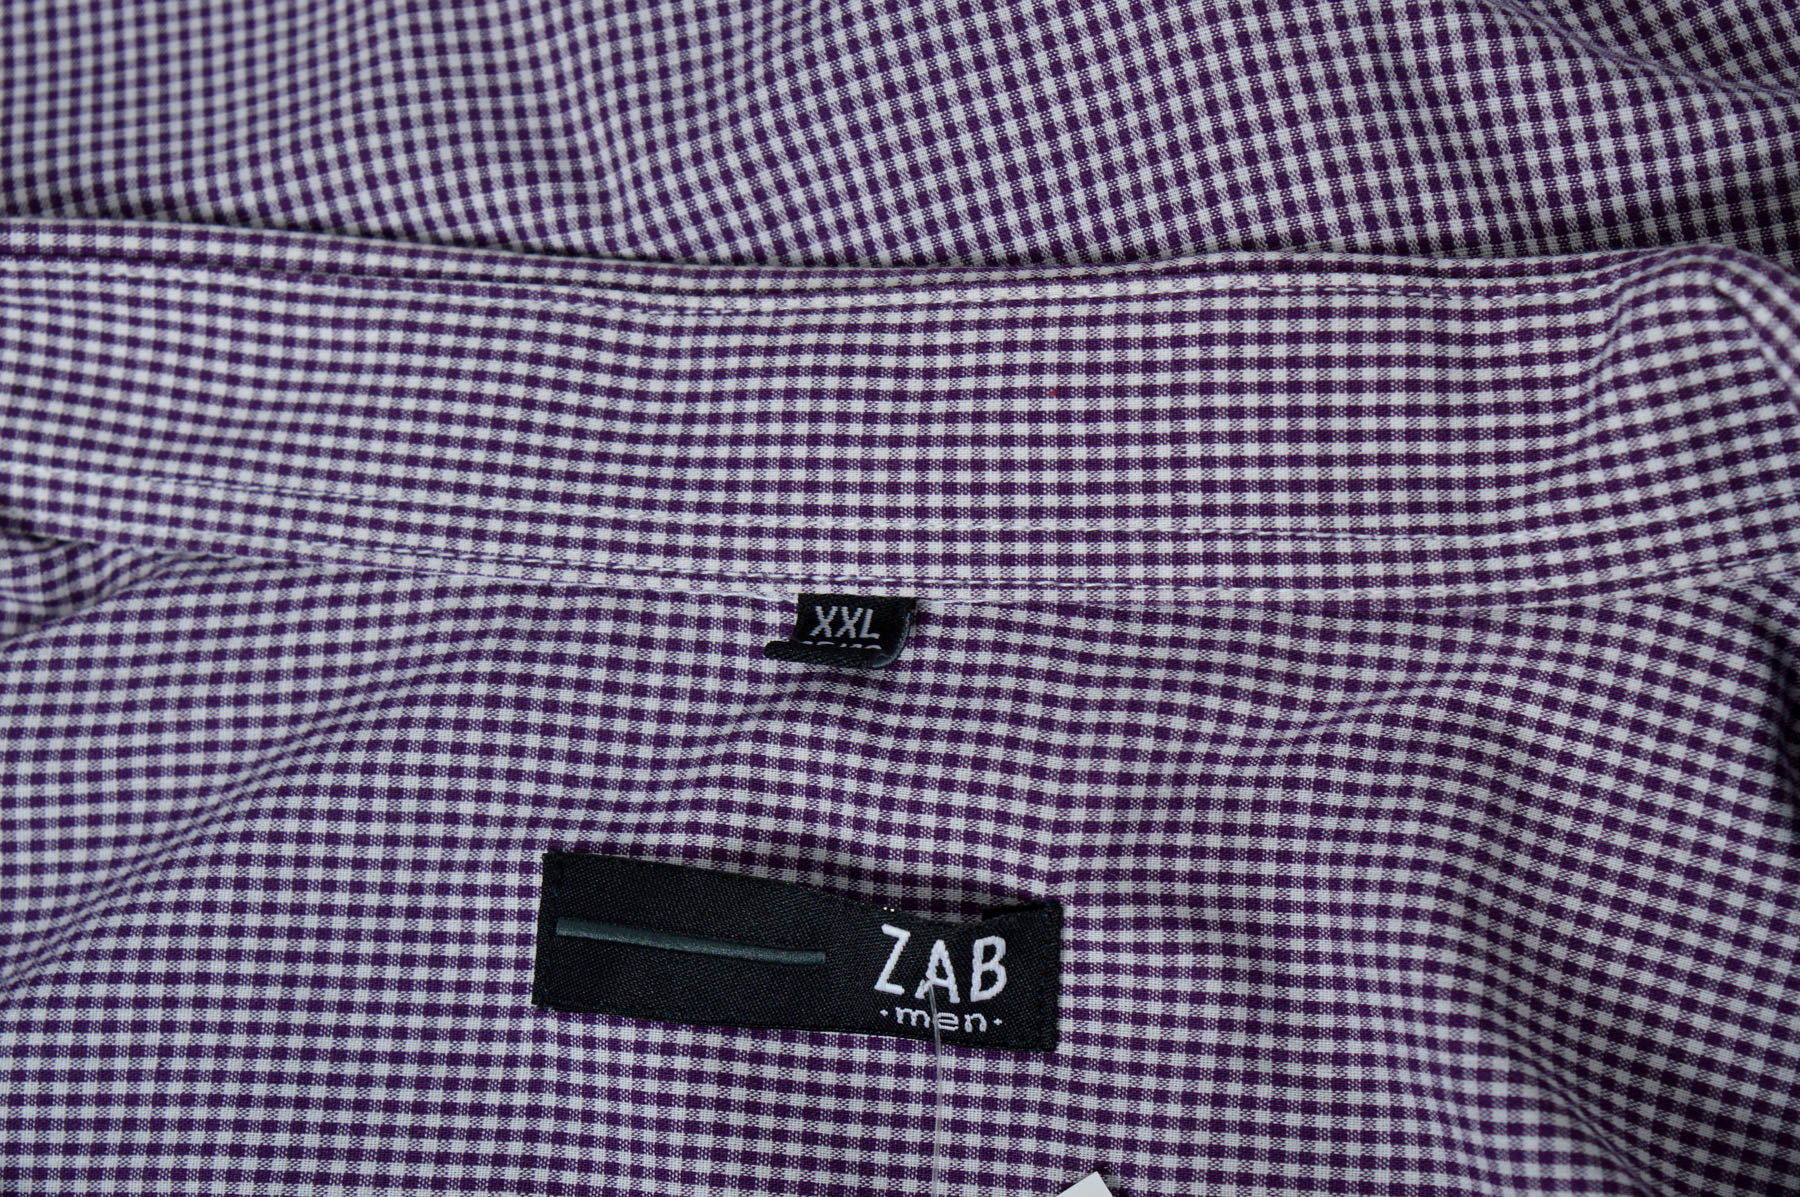 Men's shirt - ZAB - 2